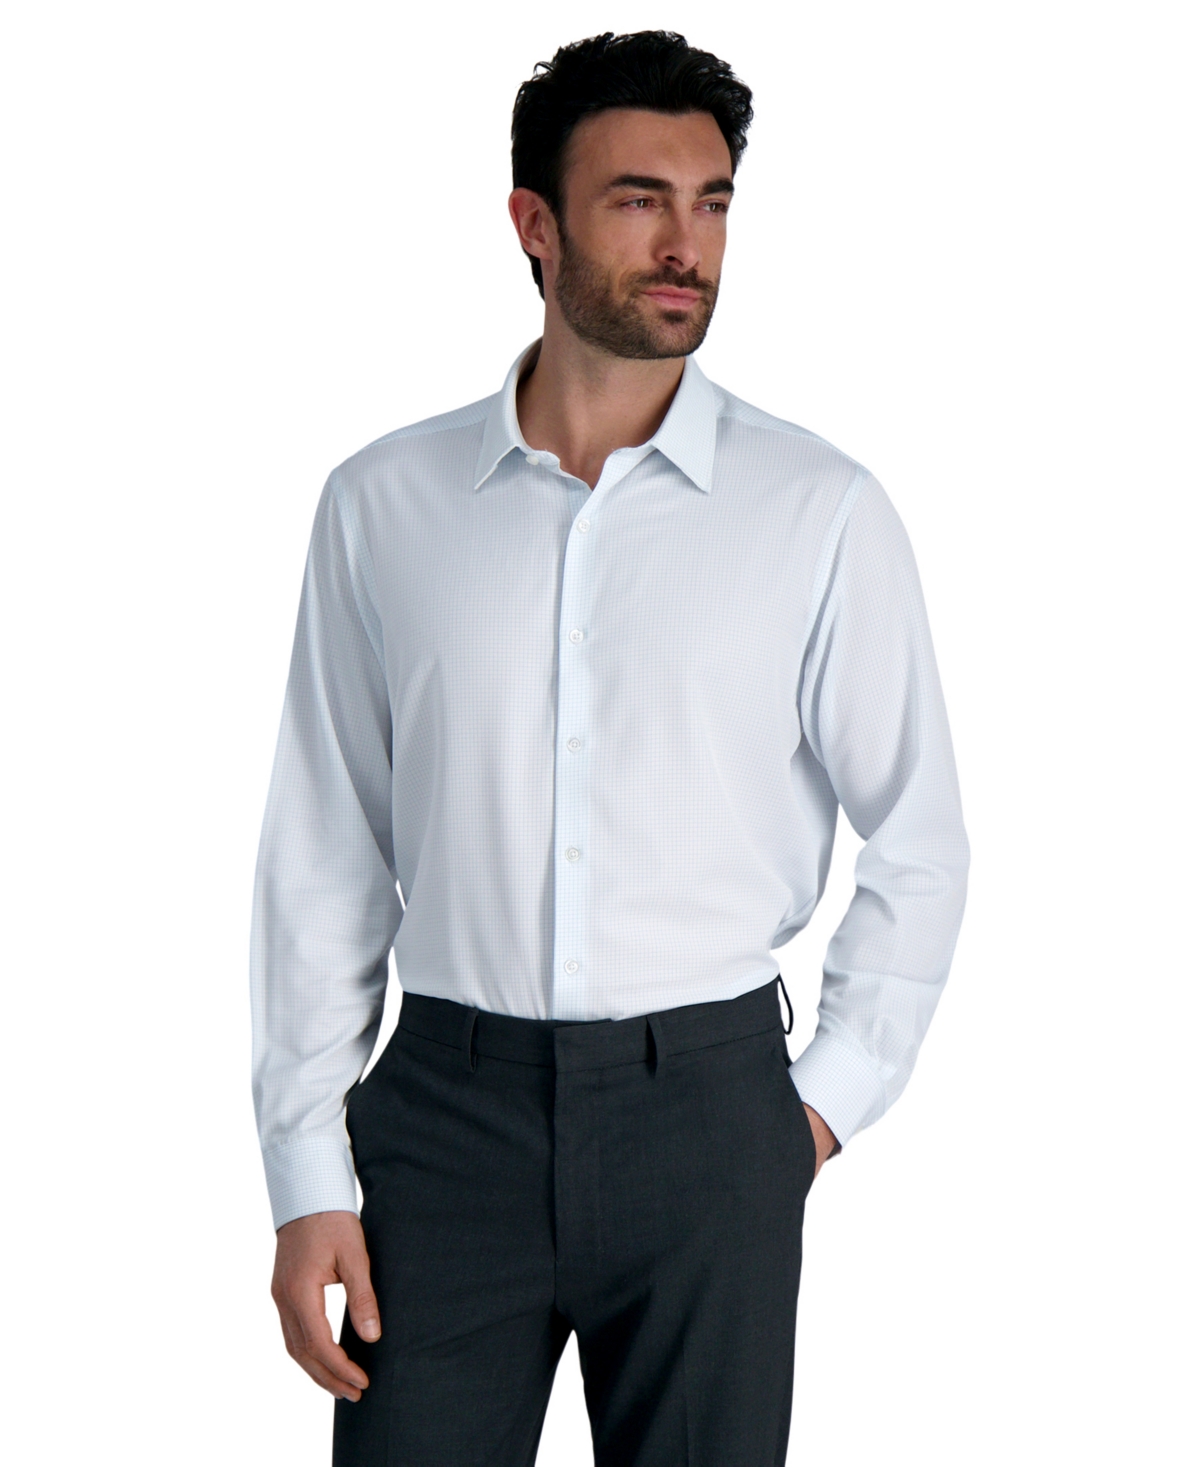 Men's Classic-Fit Smart Wash Dress Shirt - Black Check